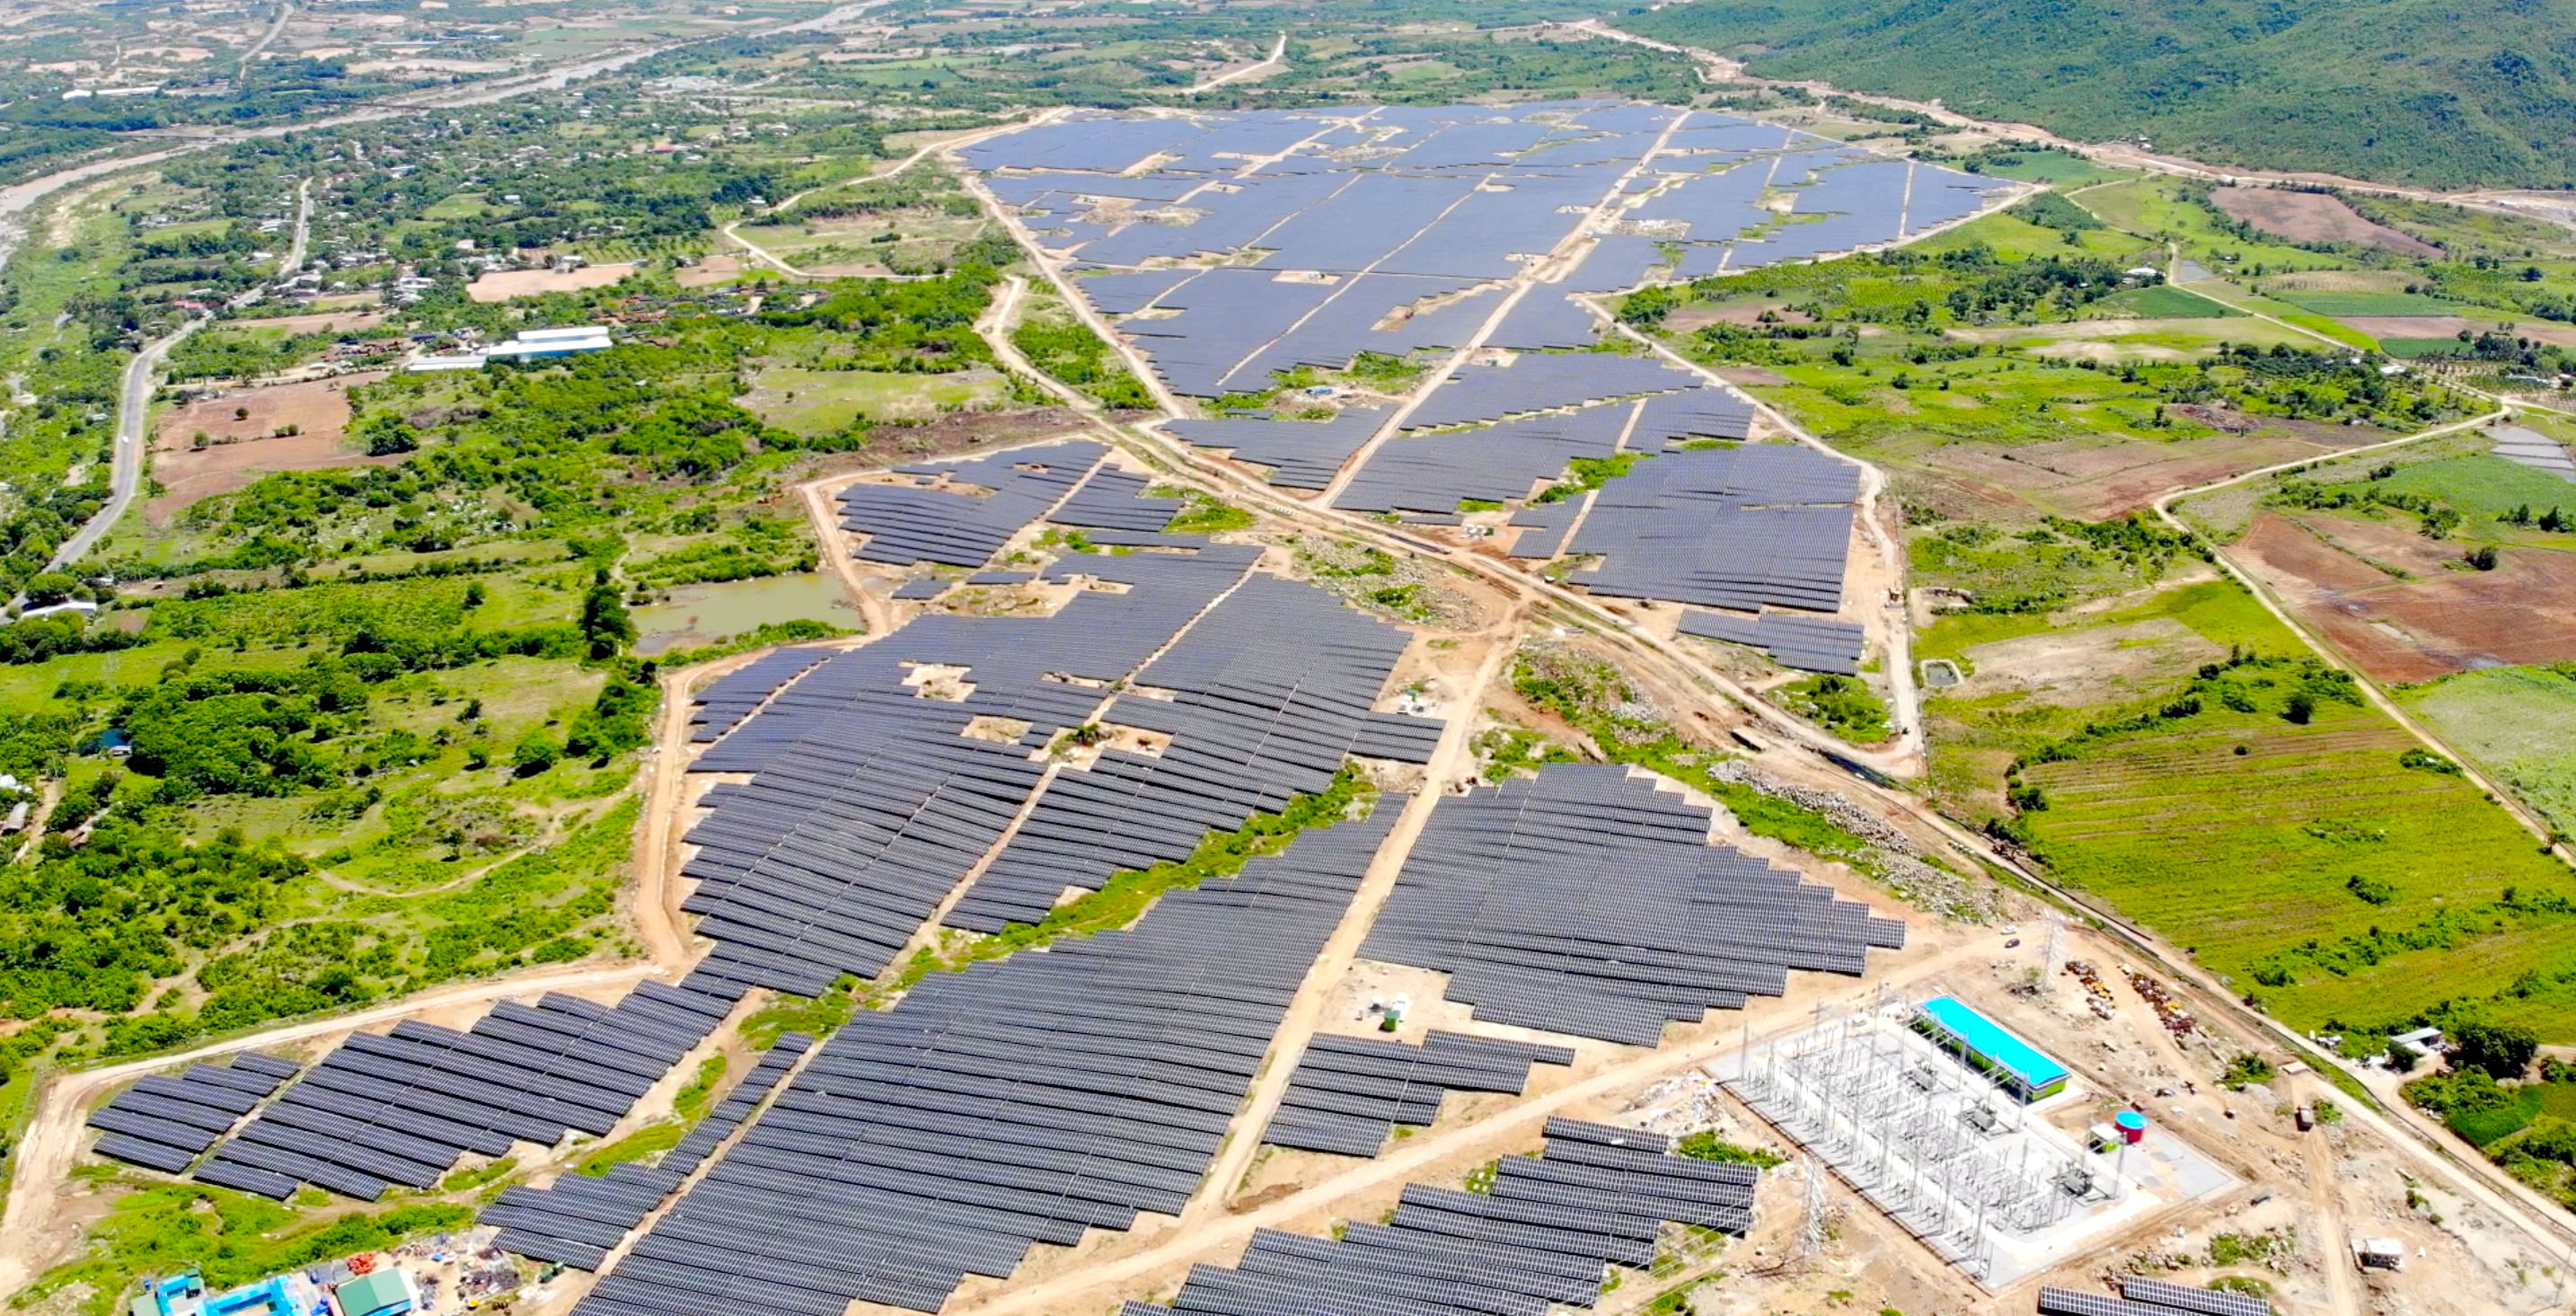 168 MWp Vietnam Solar Farm[50]